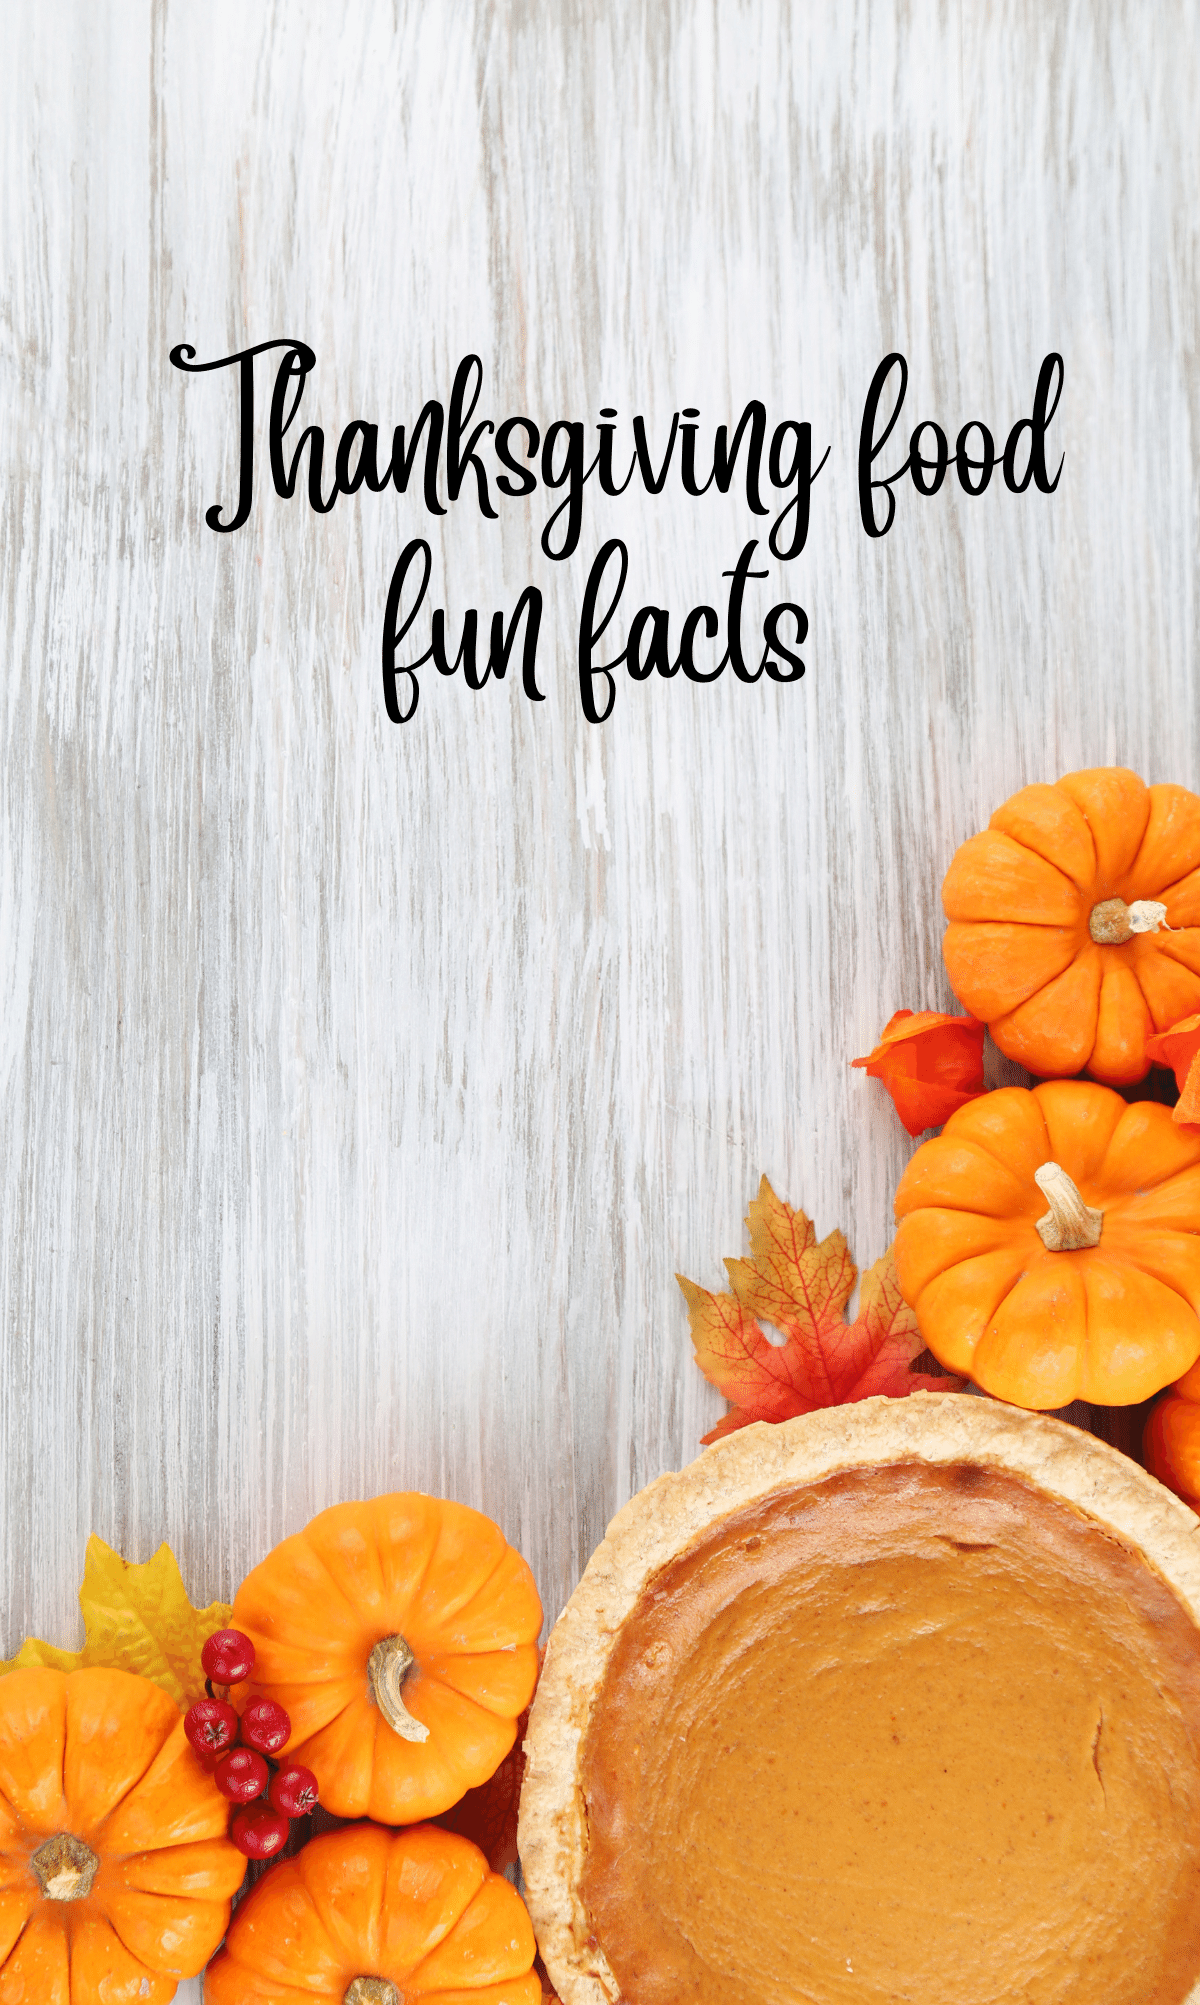 Thanksgiving Food Fun Facts